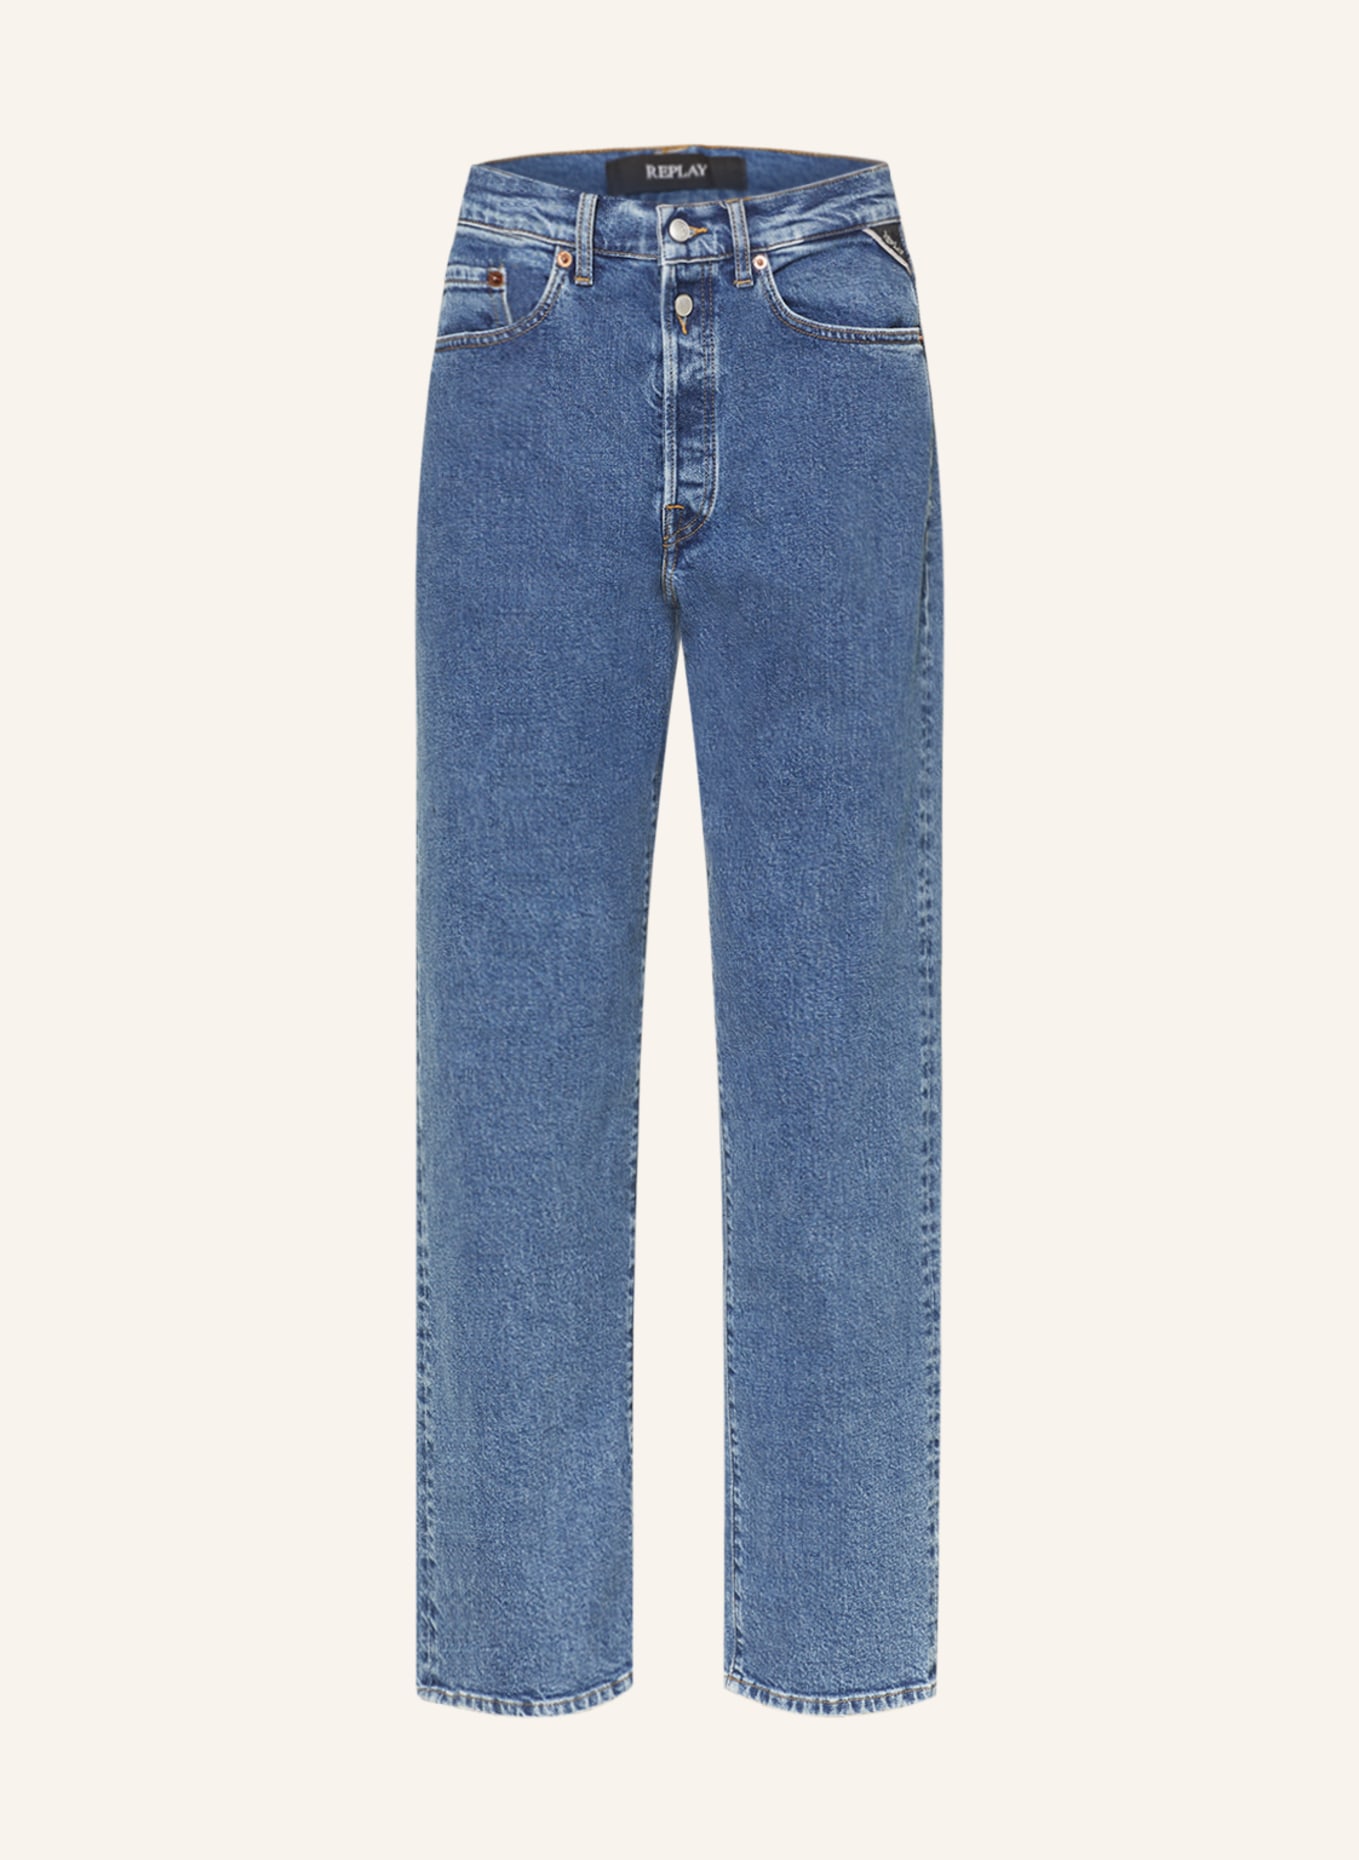 REPLAY Straight Jeans W9Z1, Farbe: 009 MEDIUM BLUE (Bild 1)